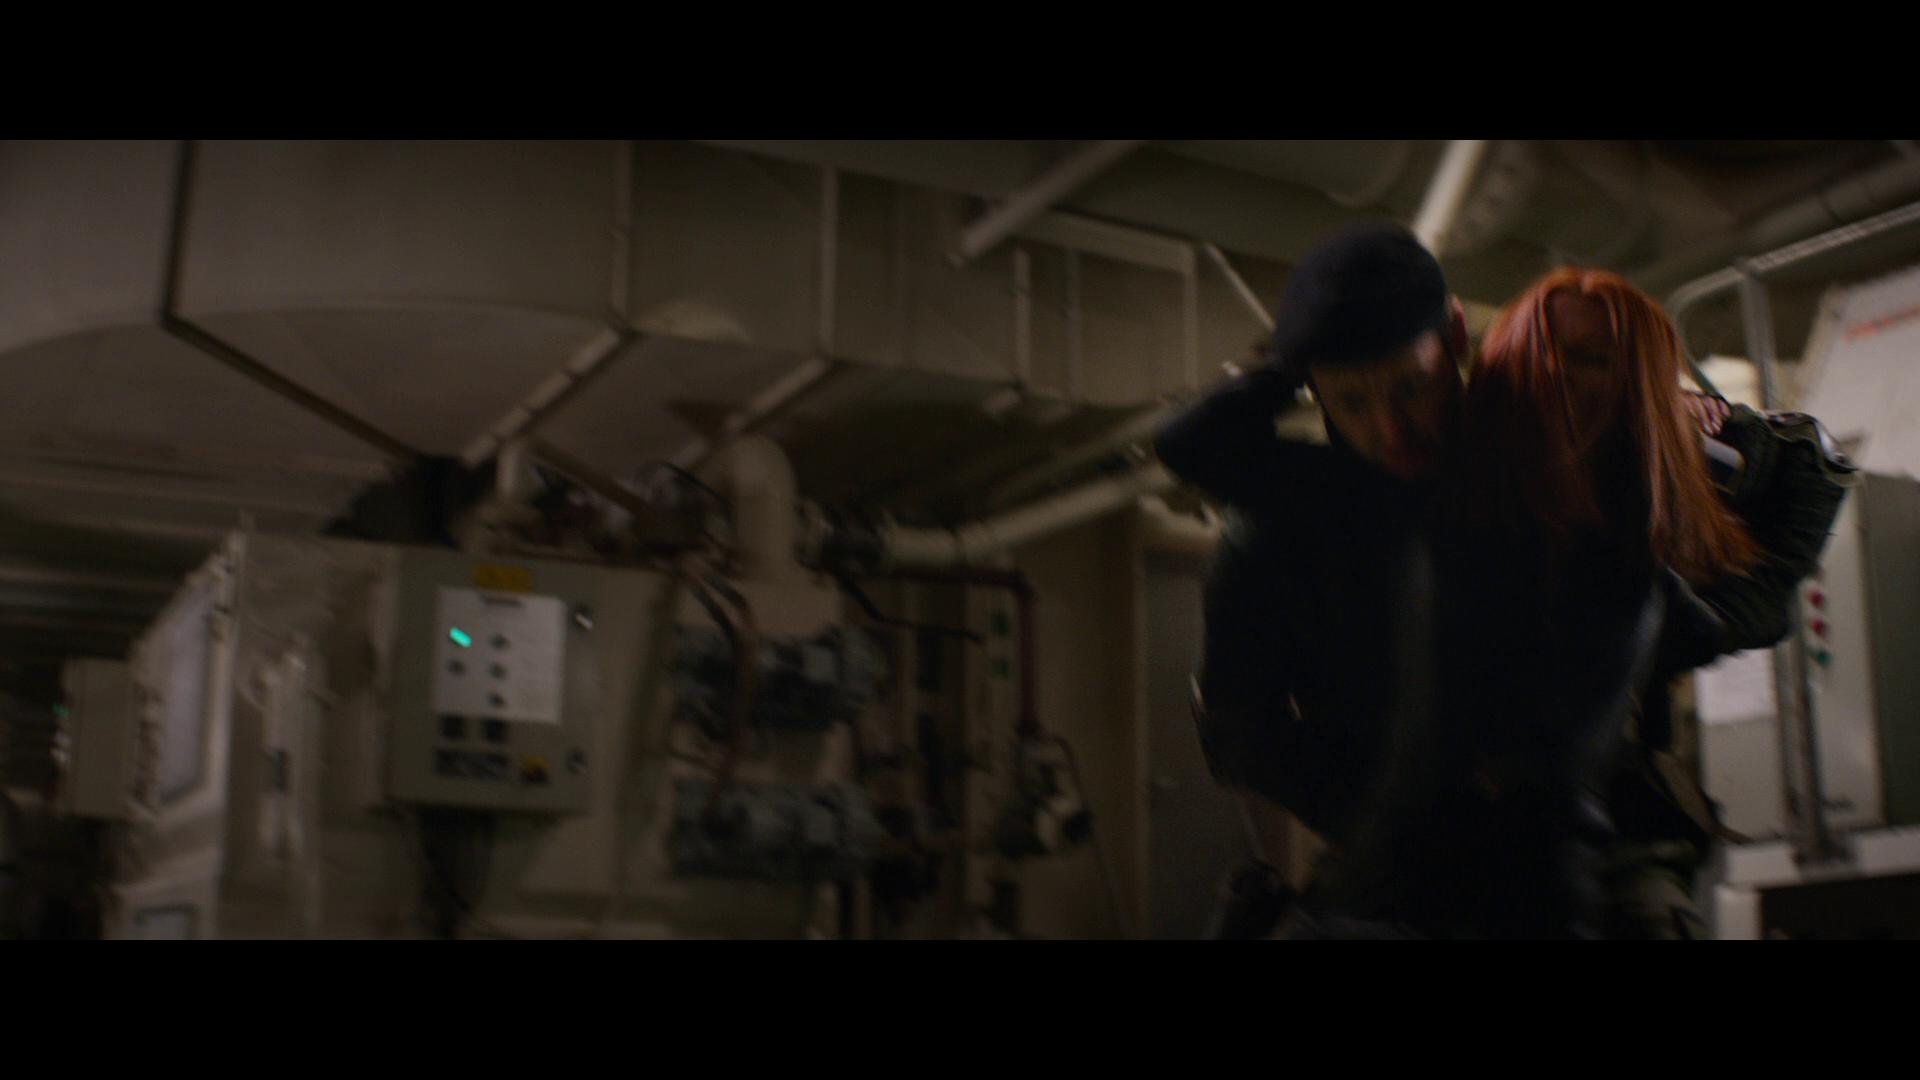 [美国队长2].Captain.America.The.Winter.Soldier.2014.3D.BluRay.1080p.AVC.DTS-HD.MA.7.1-HDSpace   43.61G-7.jpg